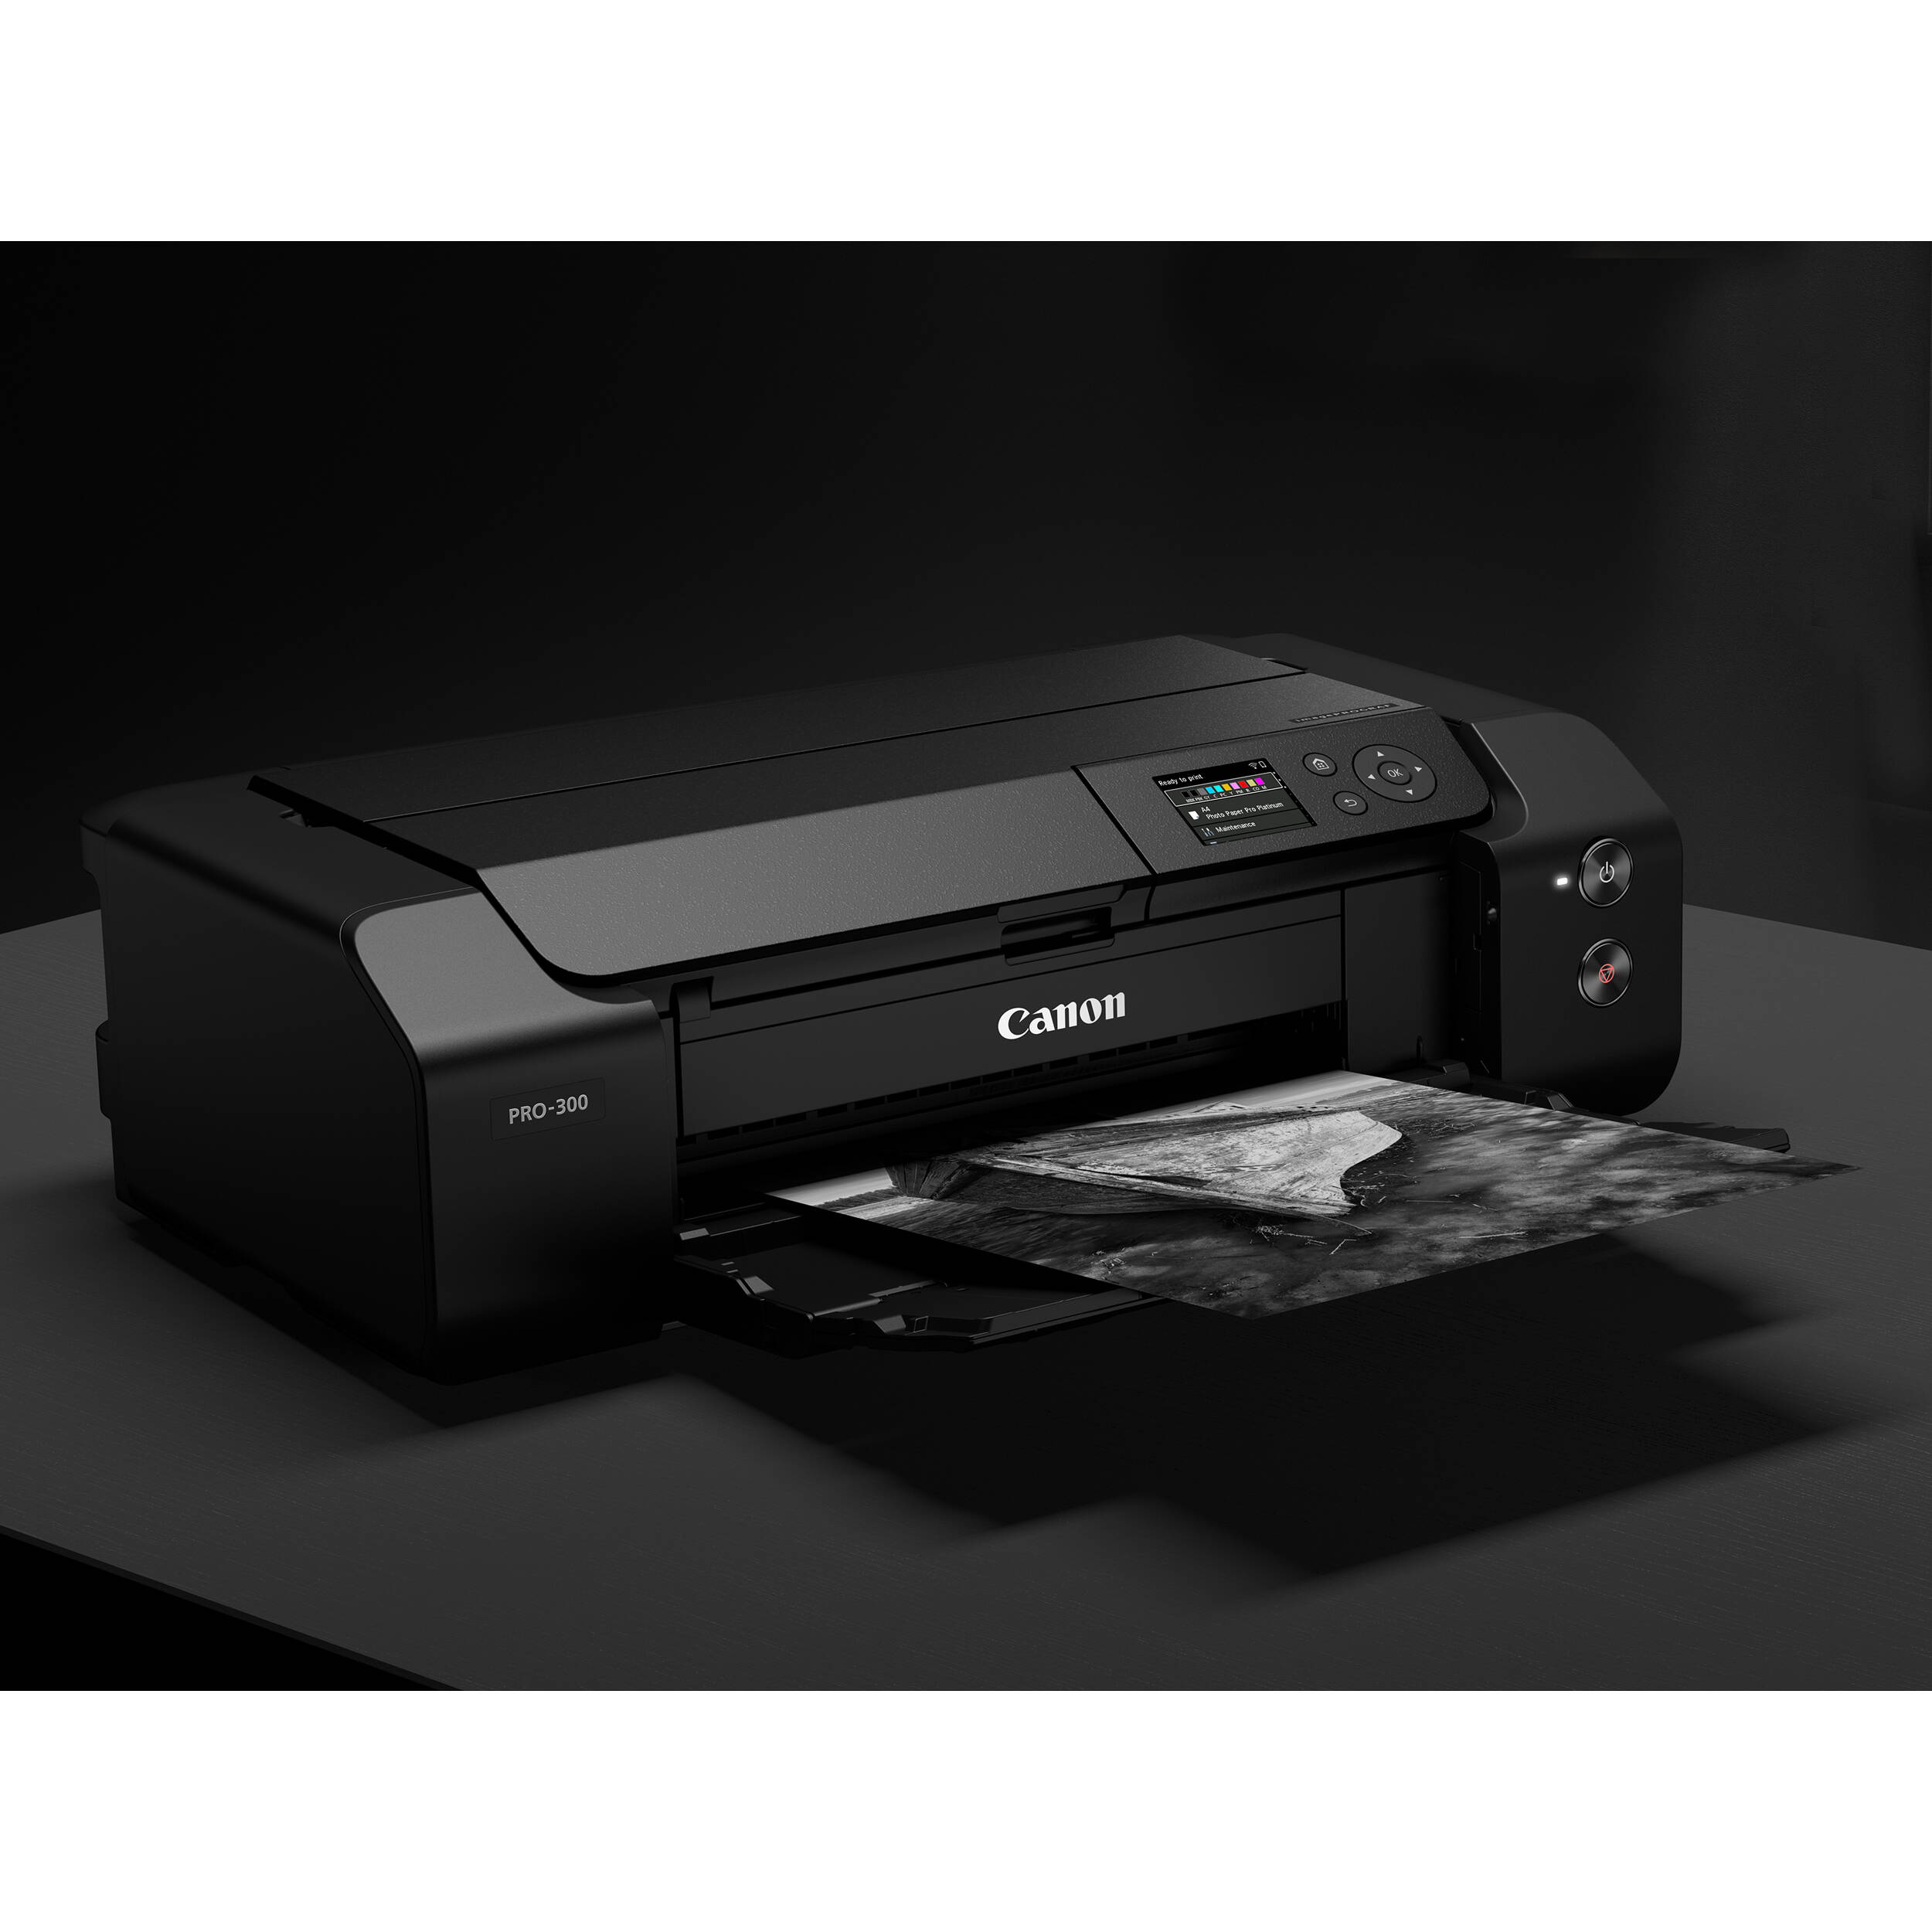 Canon ImagePROGRAF PRO 300 Printer- Damaged Box